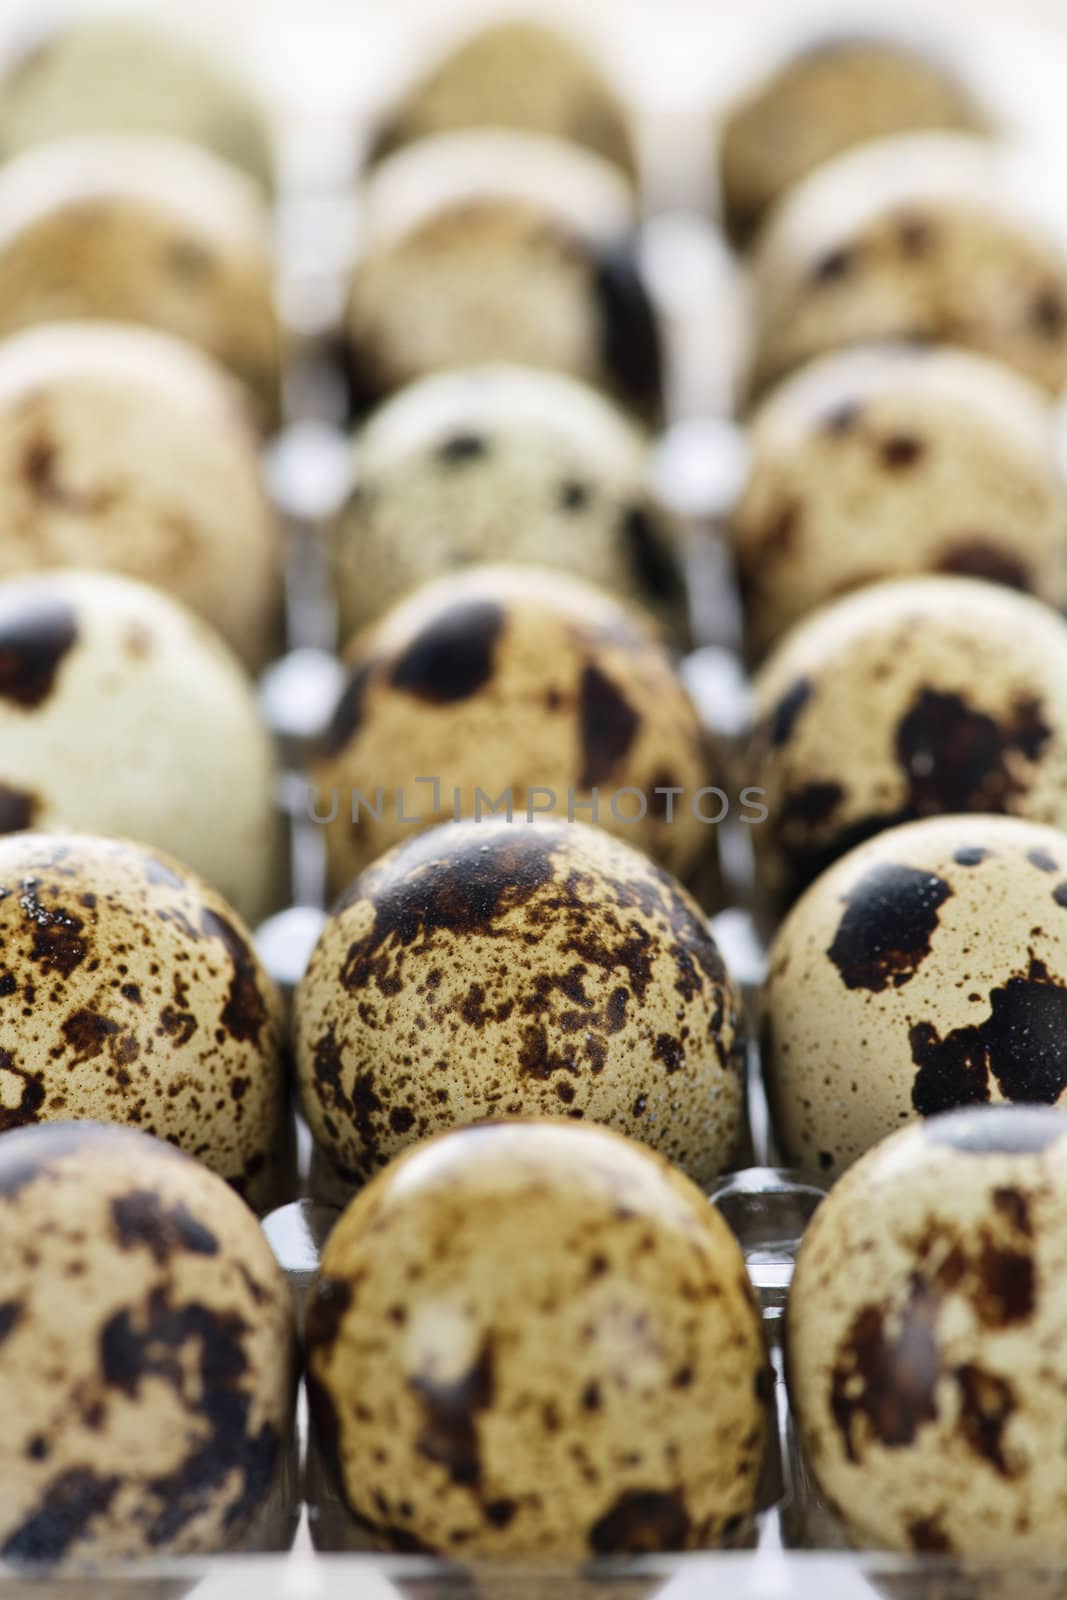 Quail eggs by elenathewise